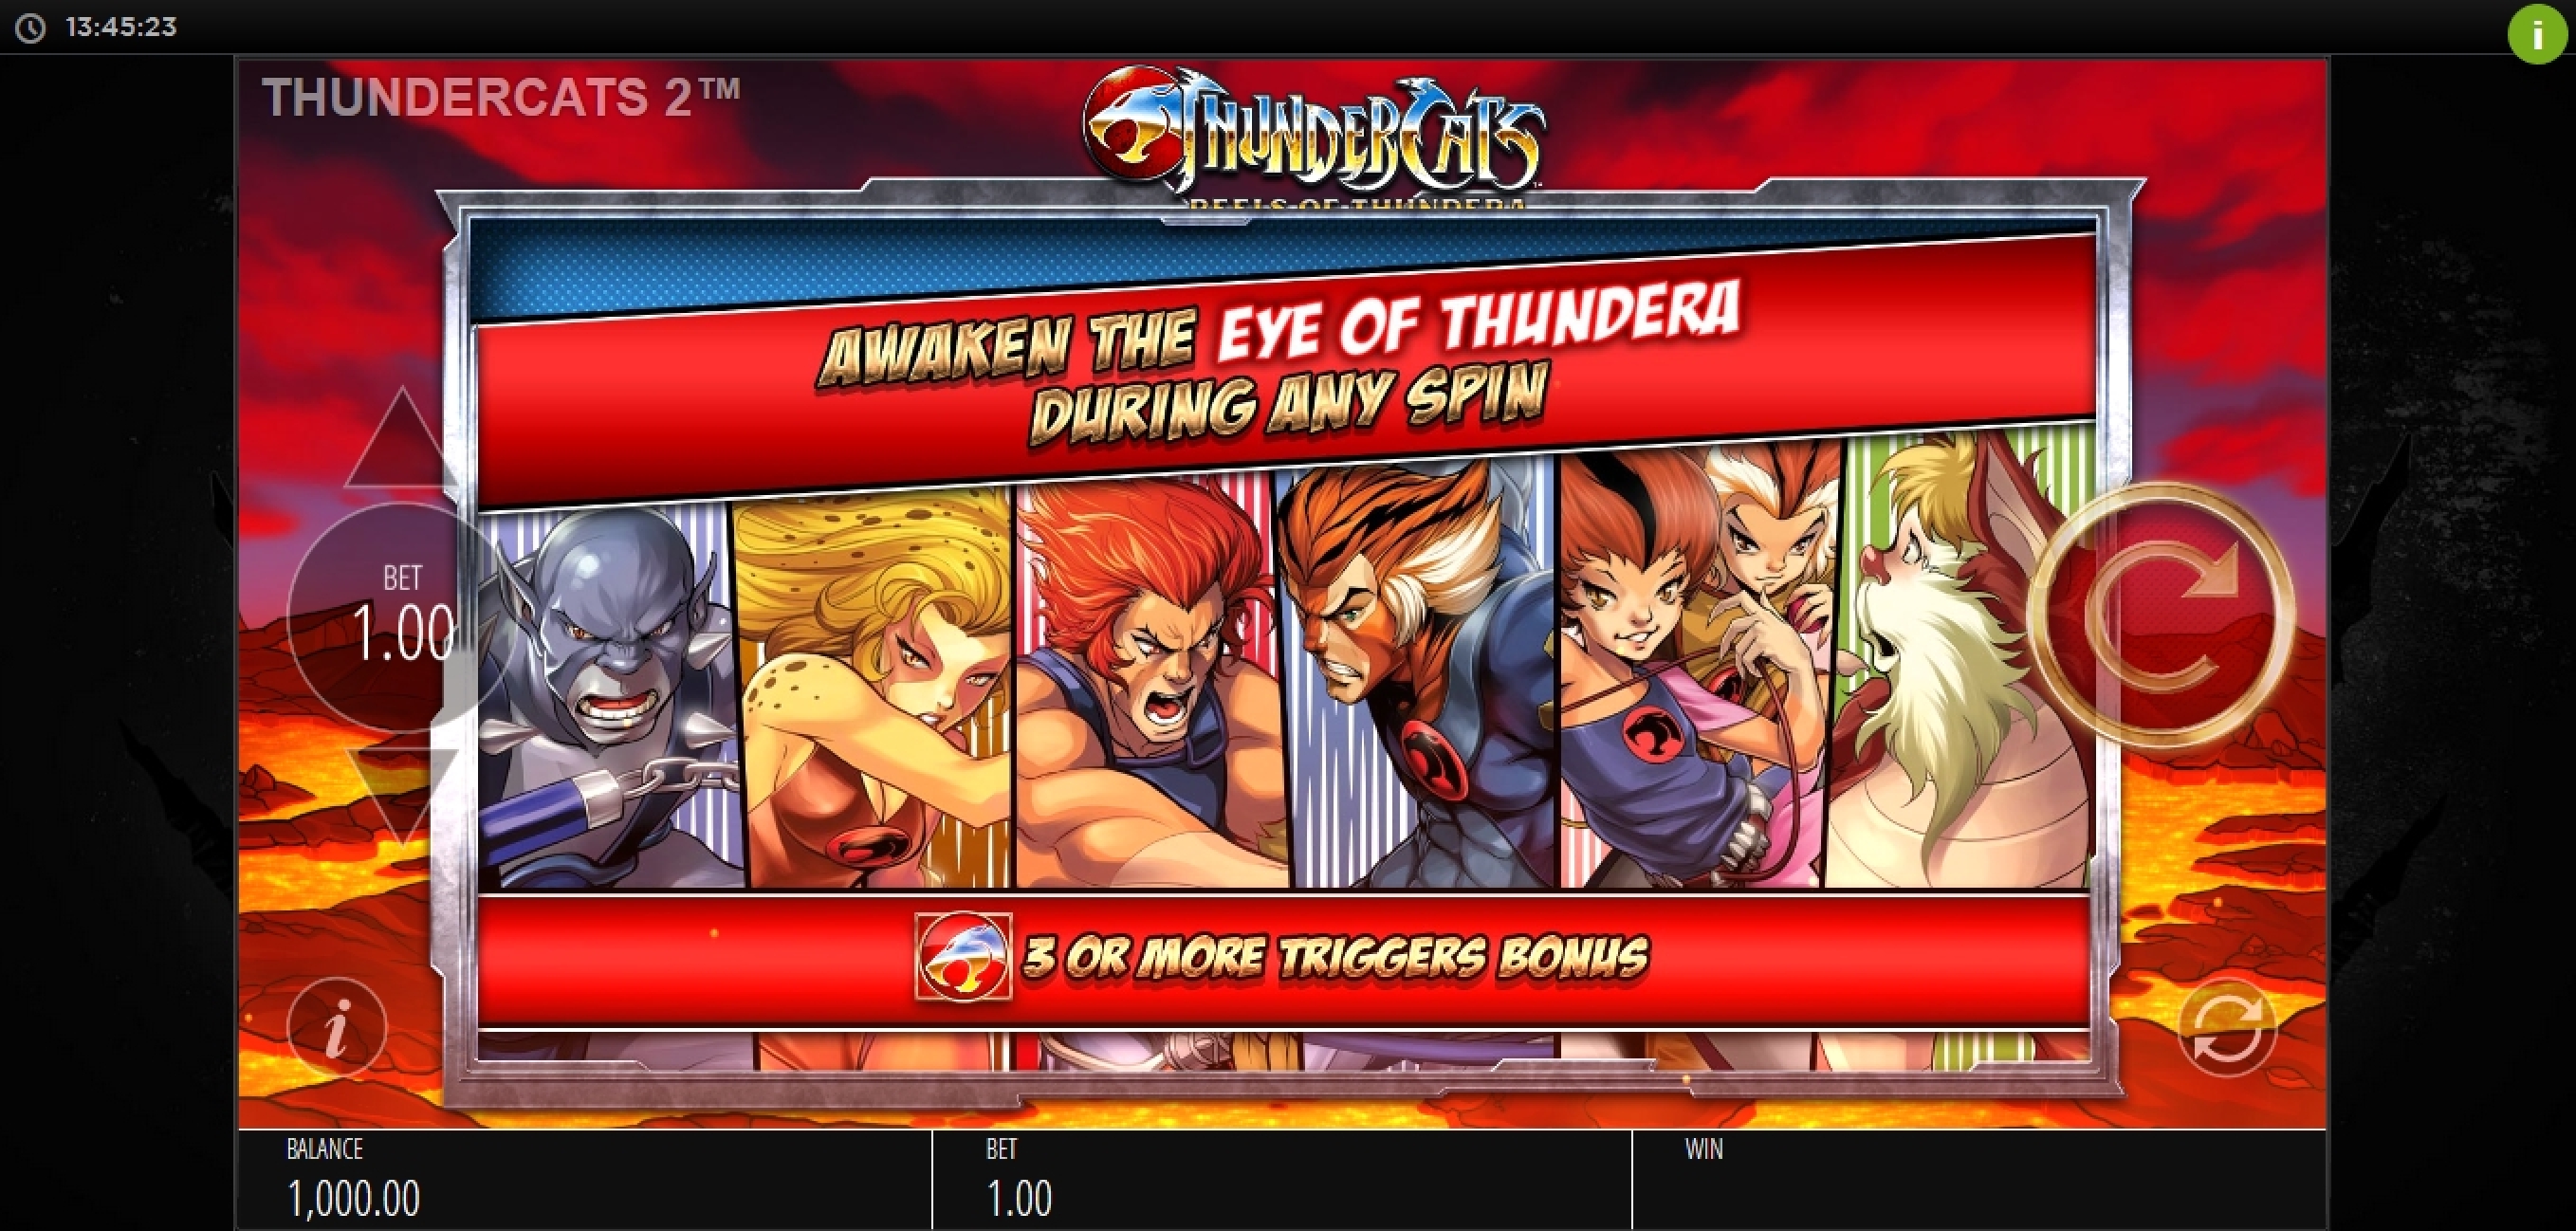 Play Thundercats Reels Of Thundera Free Casino Slot Game by Blueprint Gaming